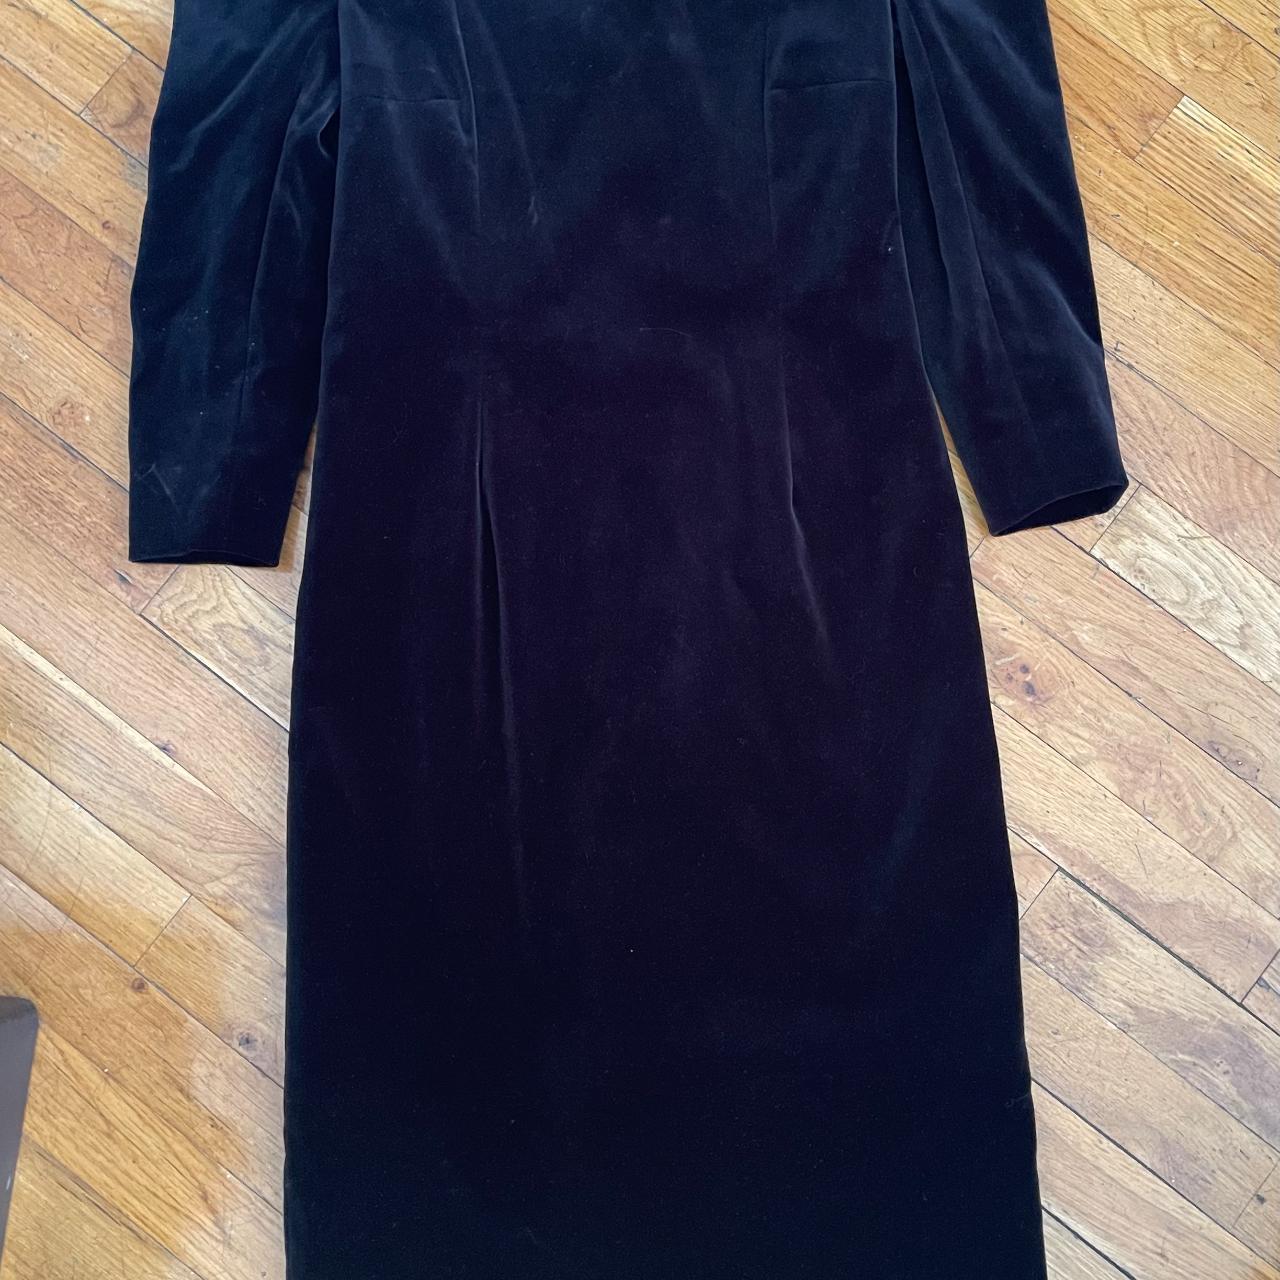 Karen Millen Women's Black and Gold Dress